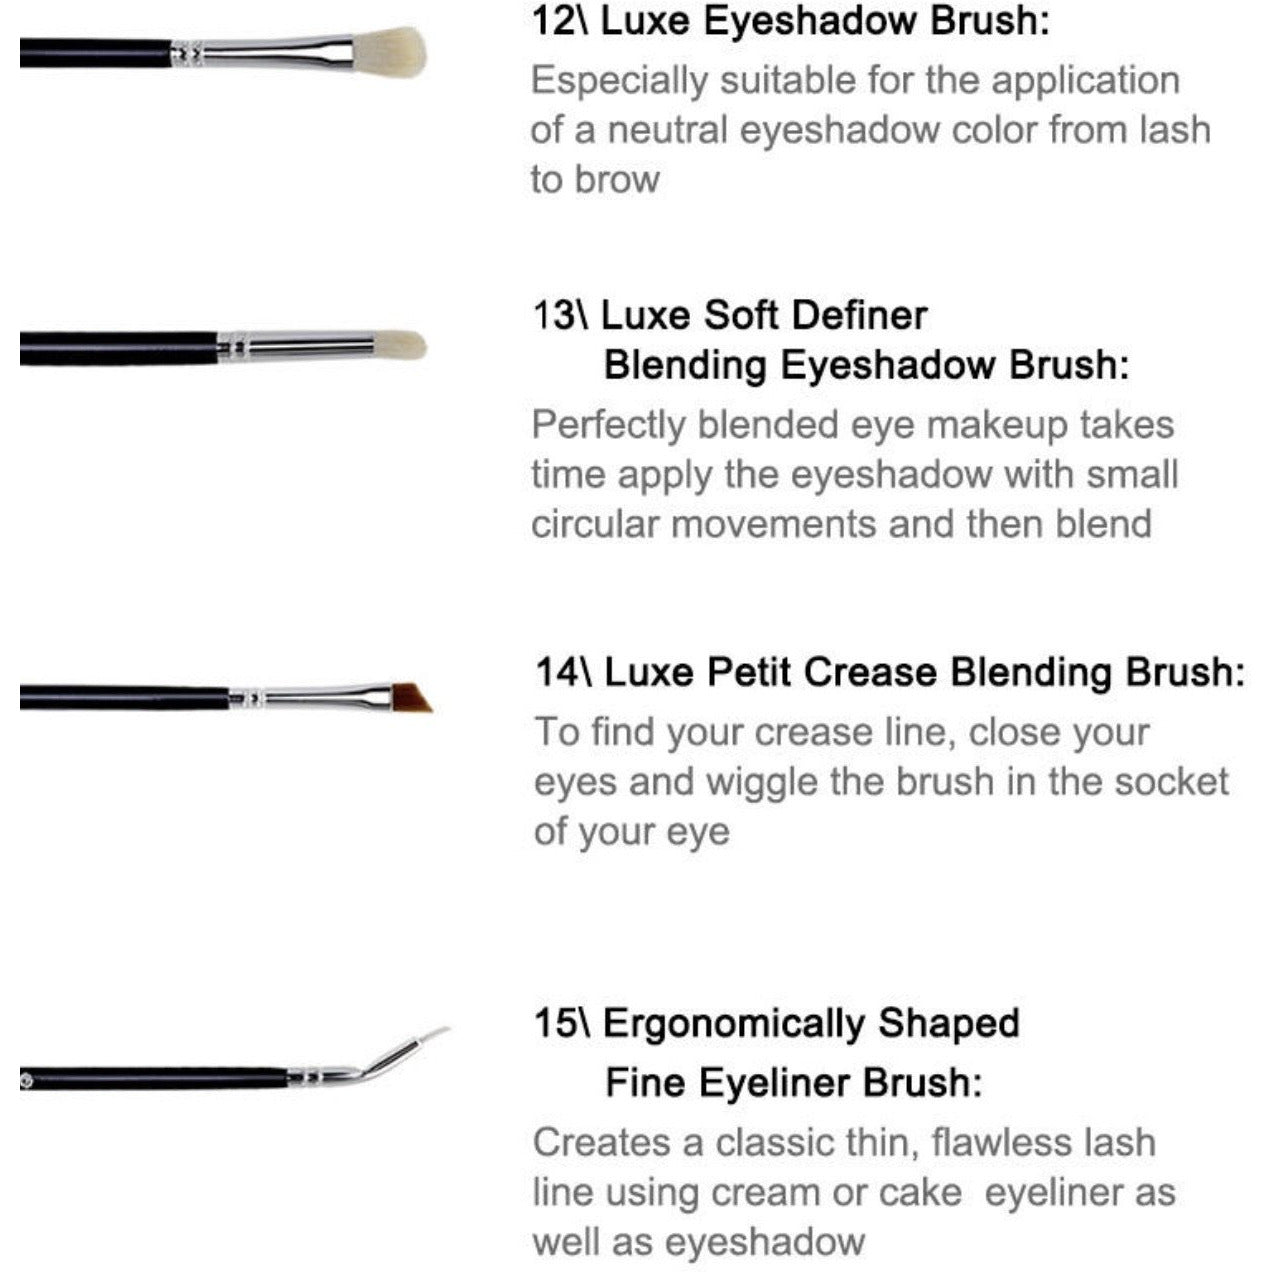 15 piece Make Up brush set with Bag